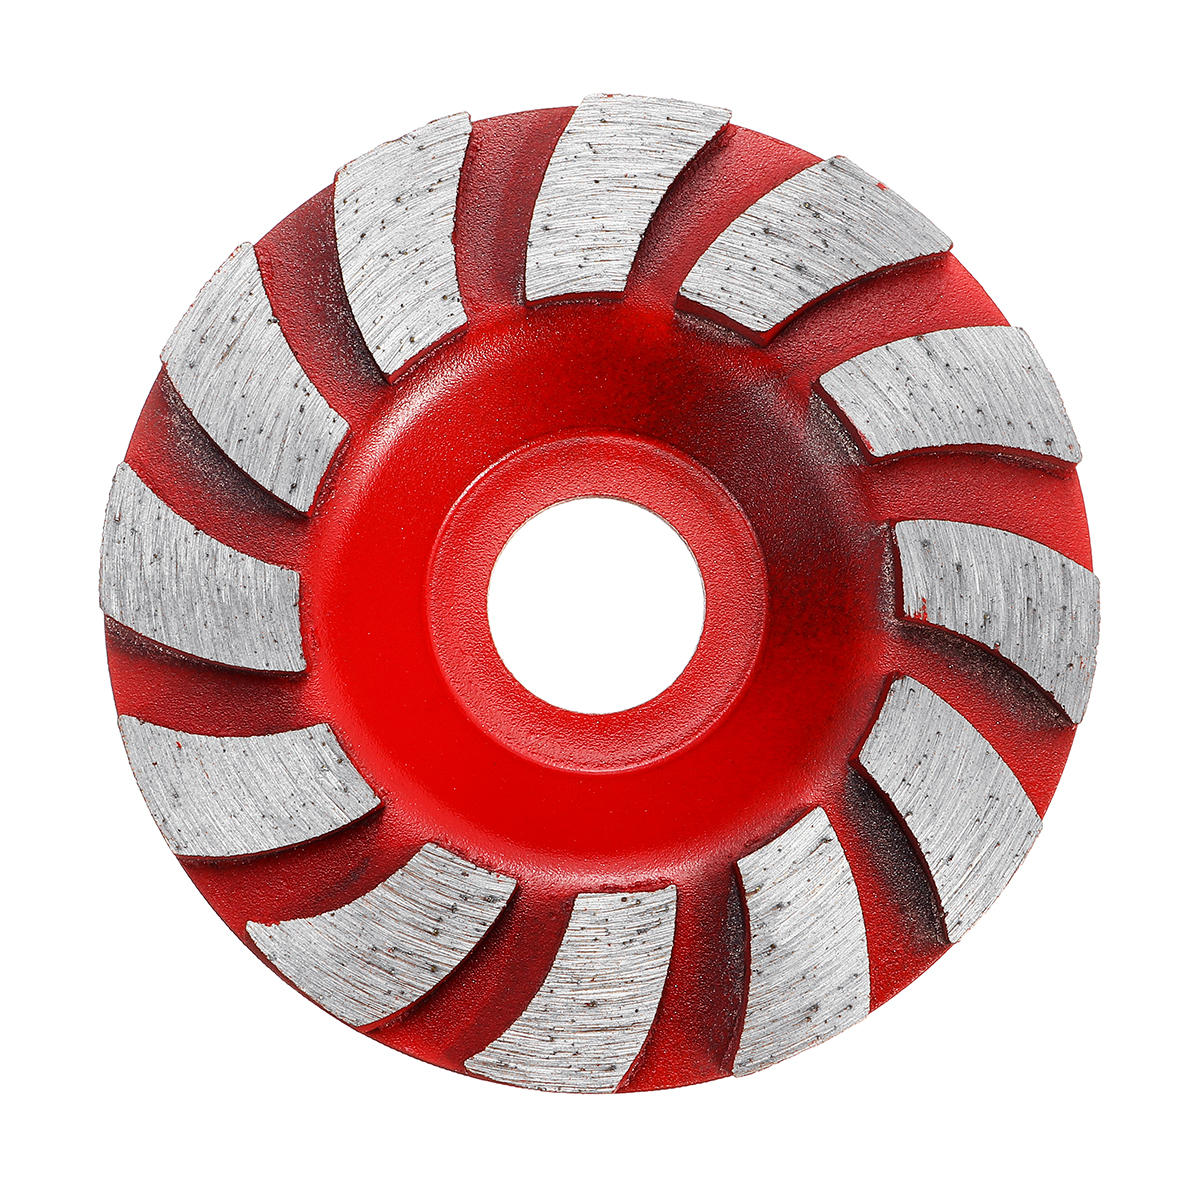 Алмазный круг красный. Красный абразивный камень. Круг 90 мм. Red Diamond grinding Wheel. Круг улитка